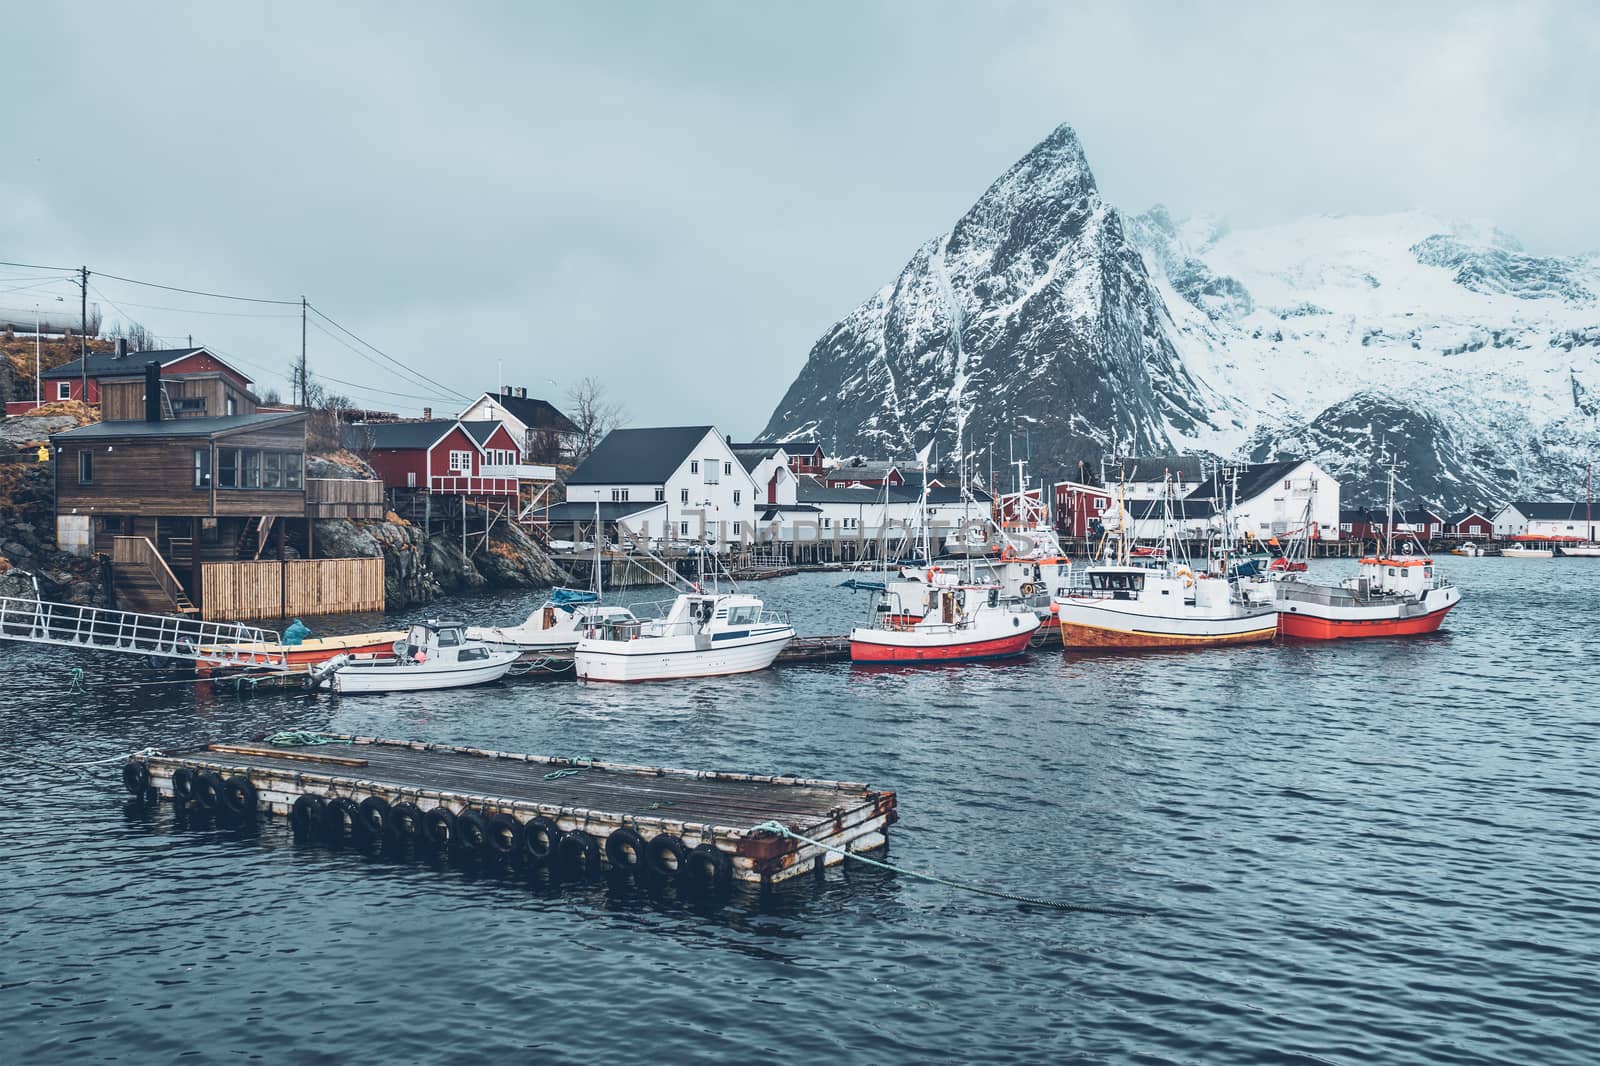 Hamnoy fishing village on Lofoten Islands, Norway by dimol